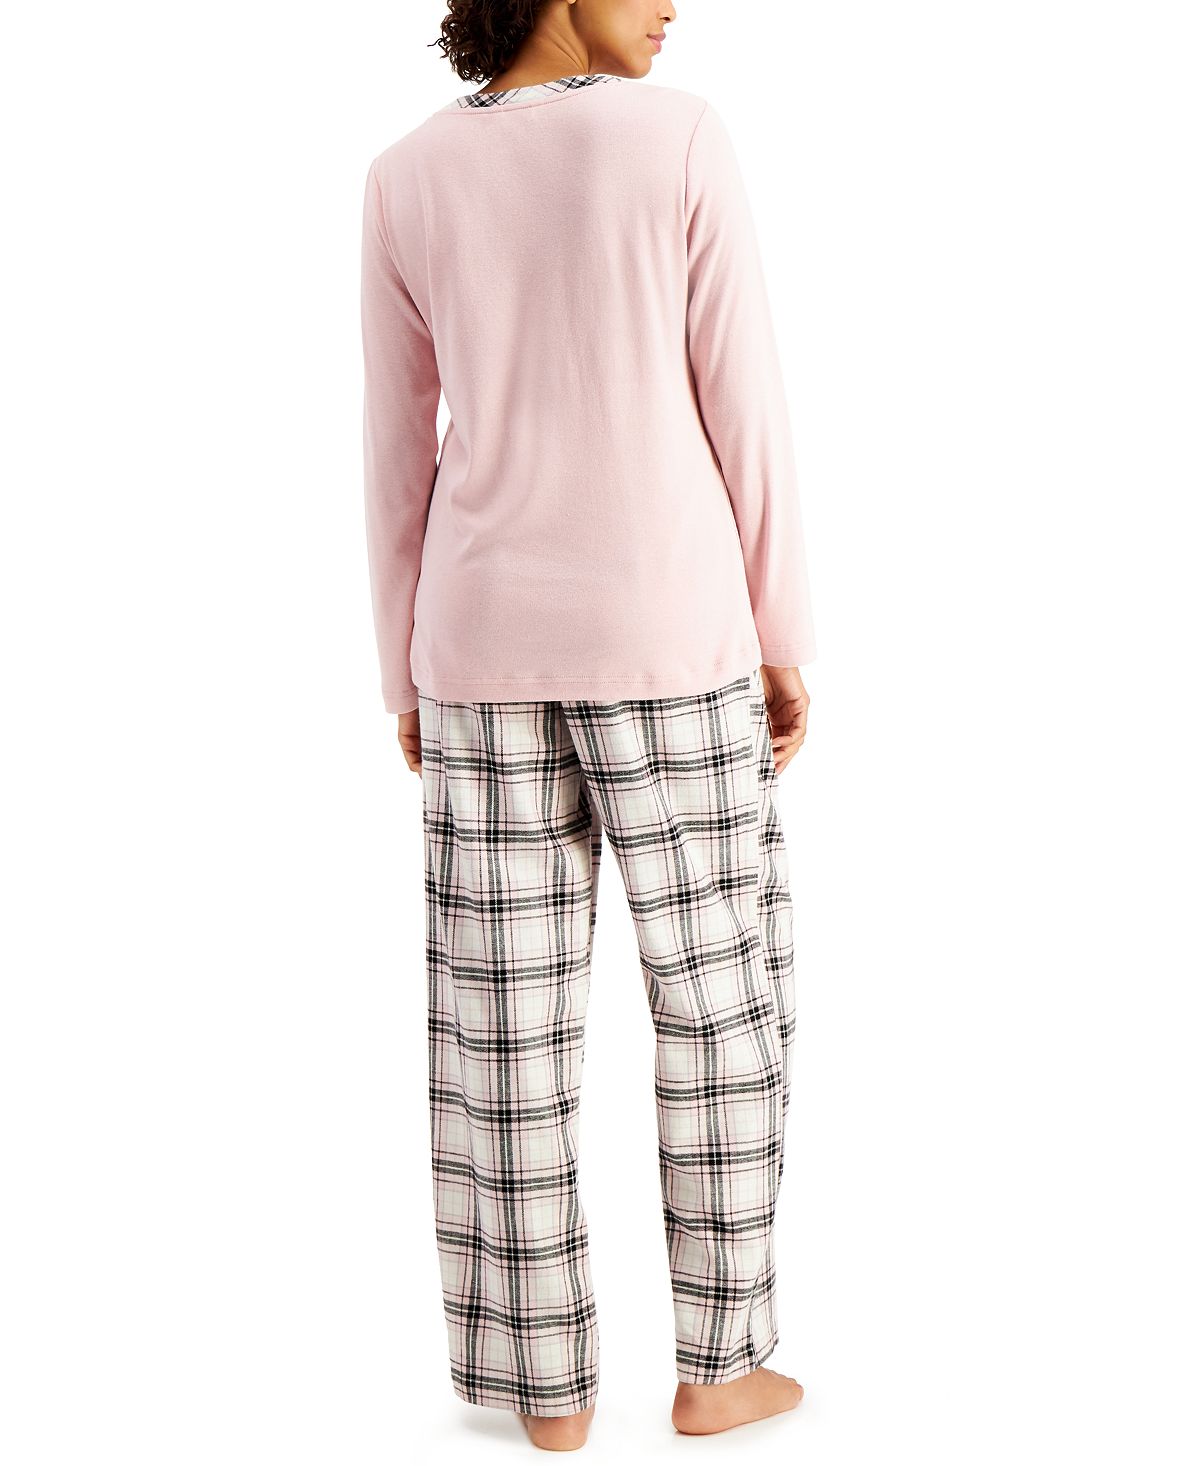 Charter Club Mixit Solid Top & Plaid Flannel Pajama Pants Set Square Plaid